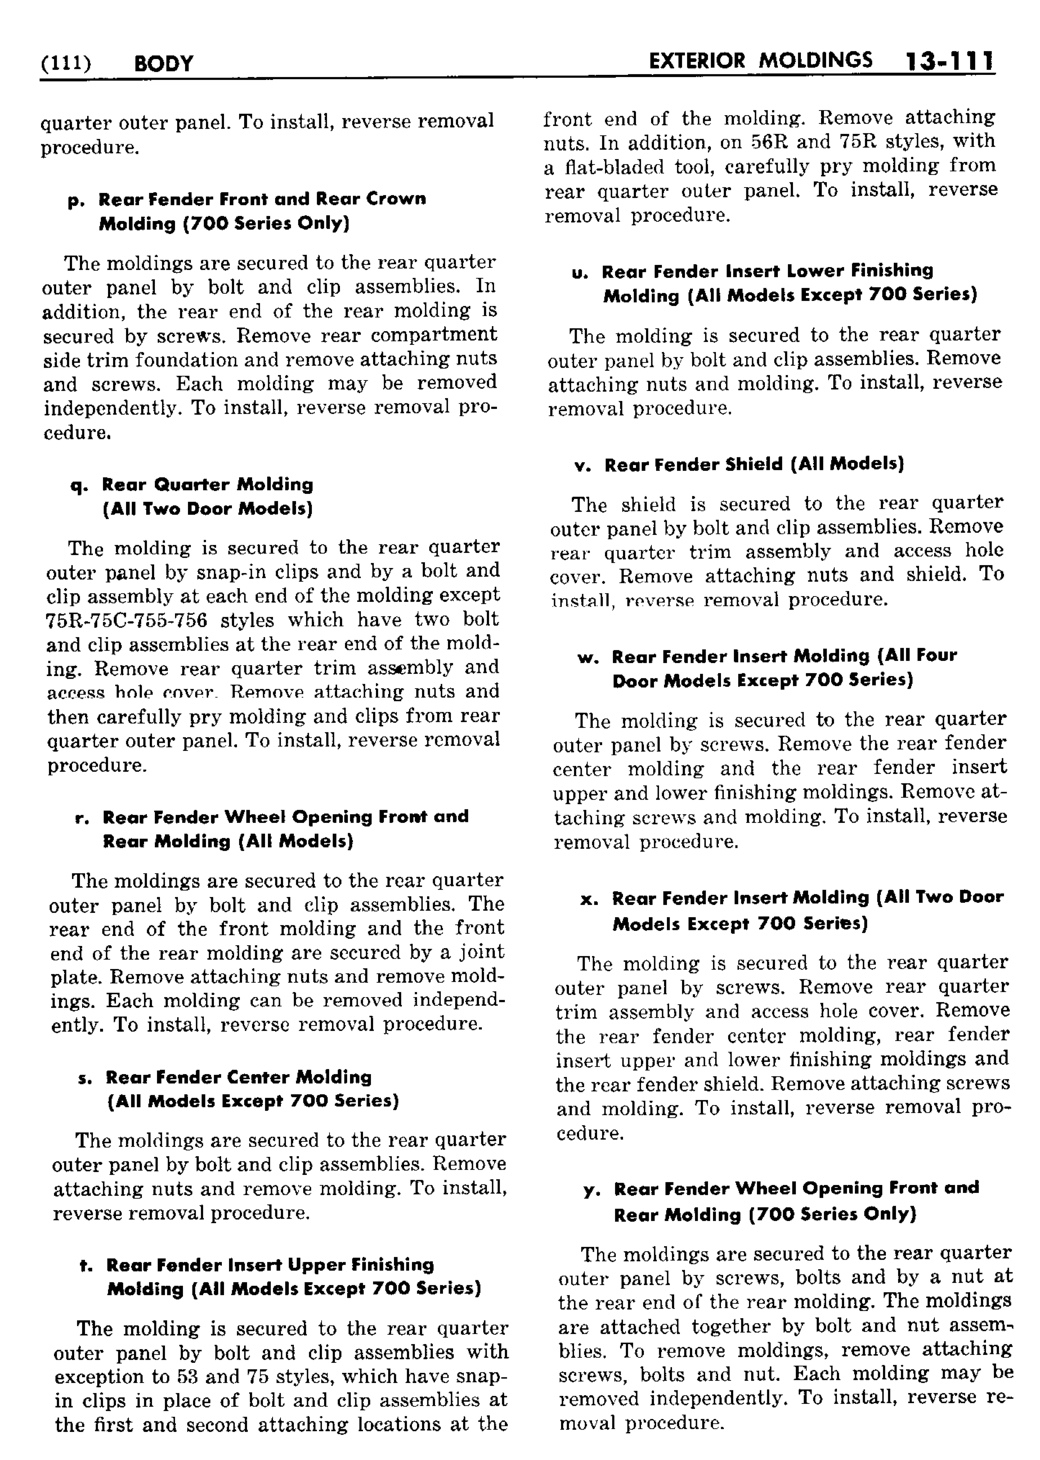 n_1958 Buick Body Service Manual-112-112.jpg